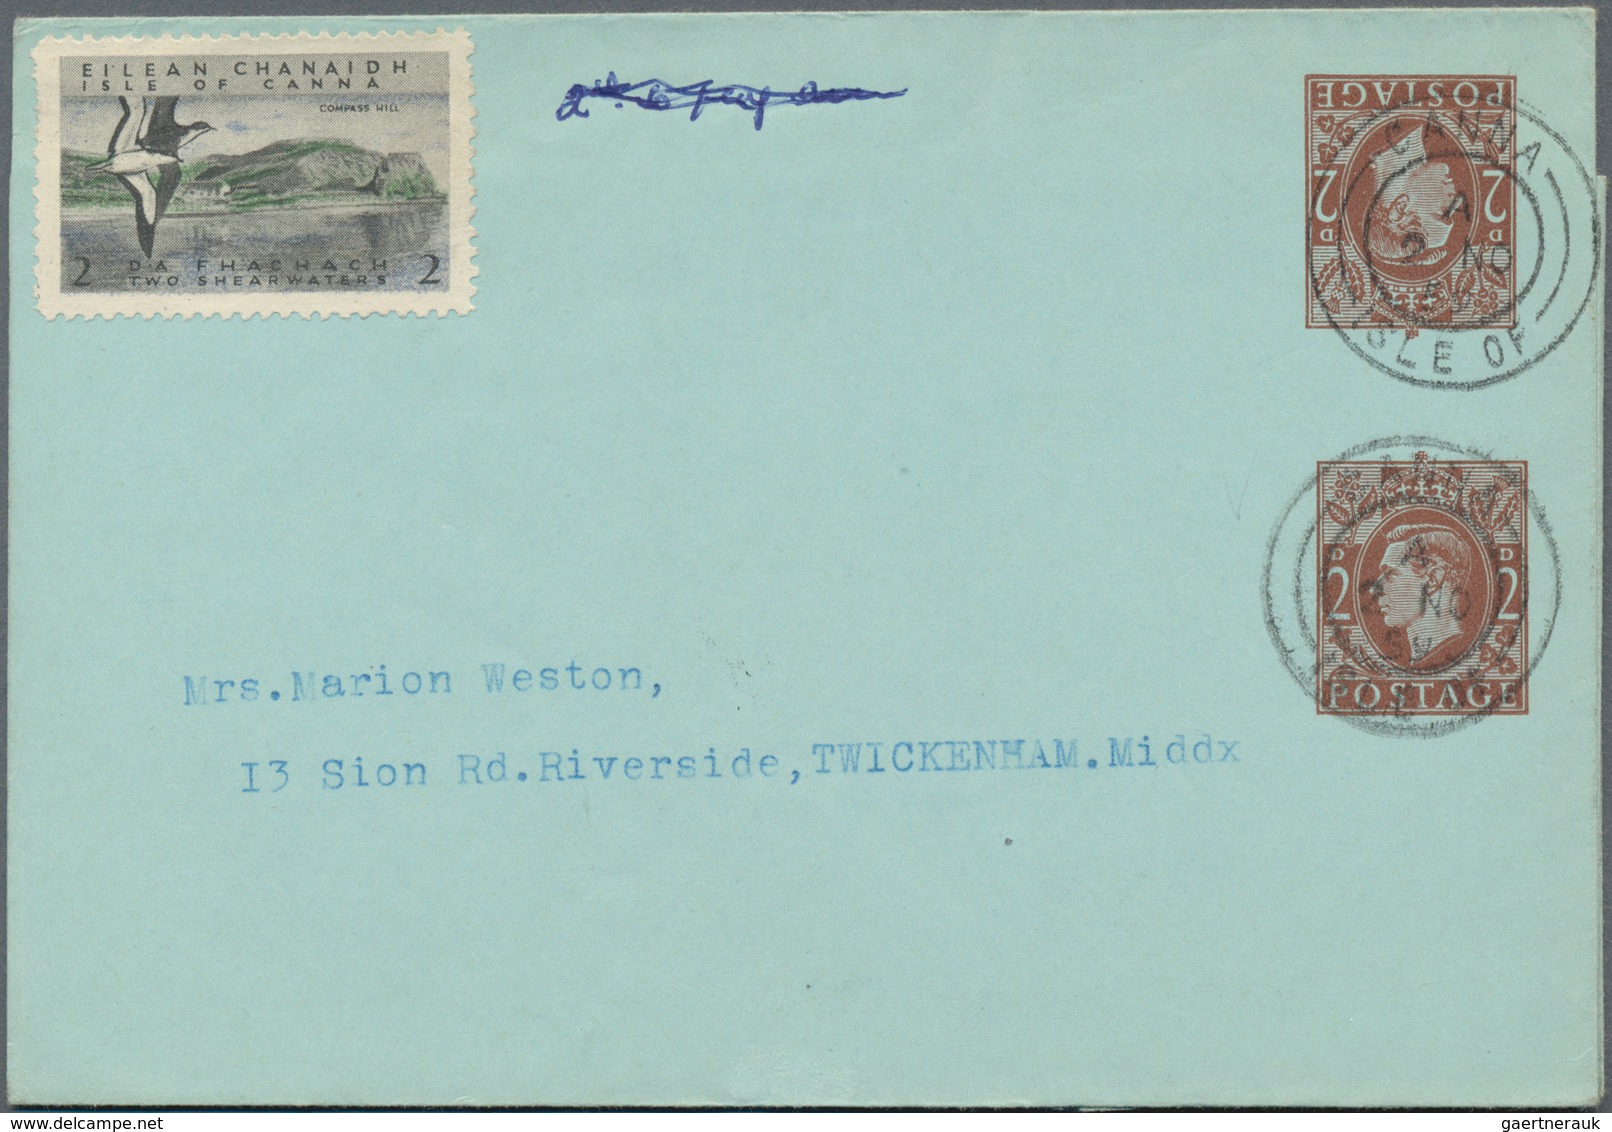 Großbritannien - Ganzsachen: 1959 four used private postal stationery lettersheets half penny, orang